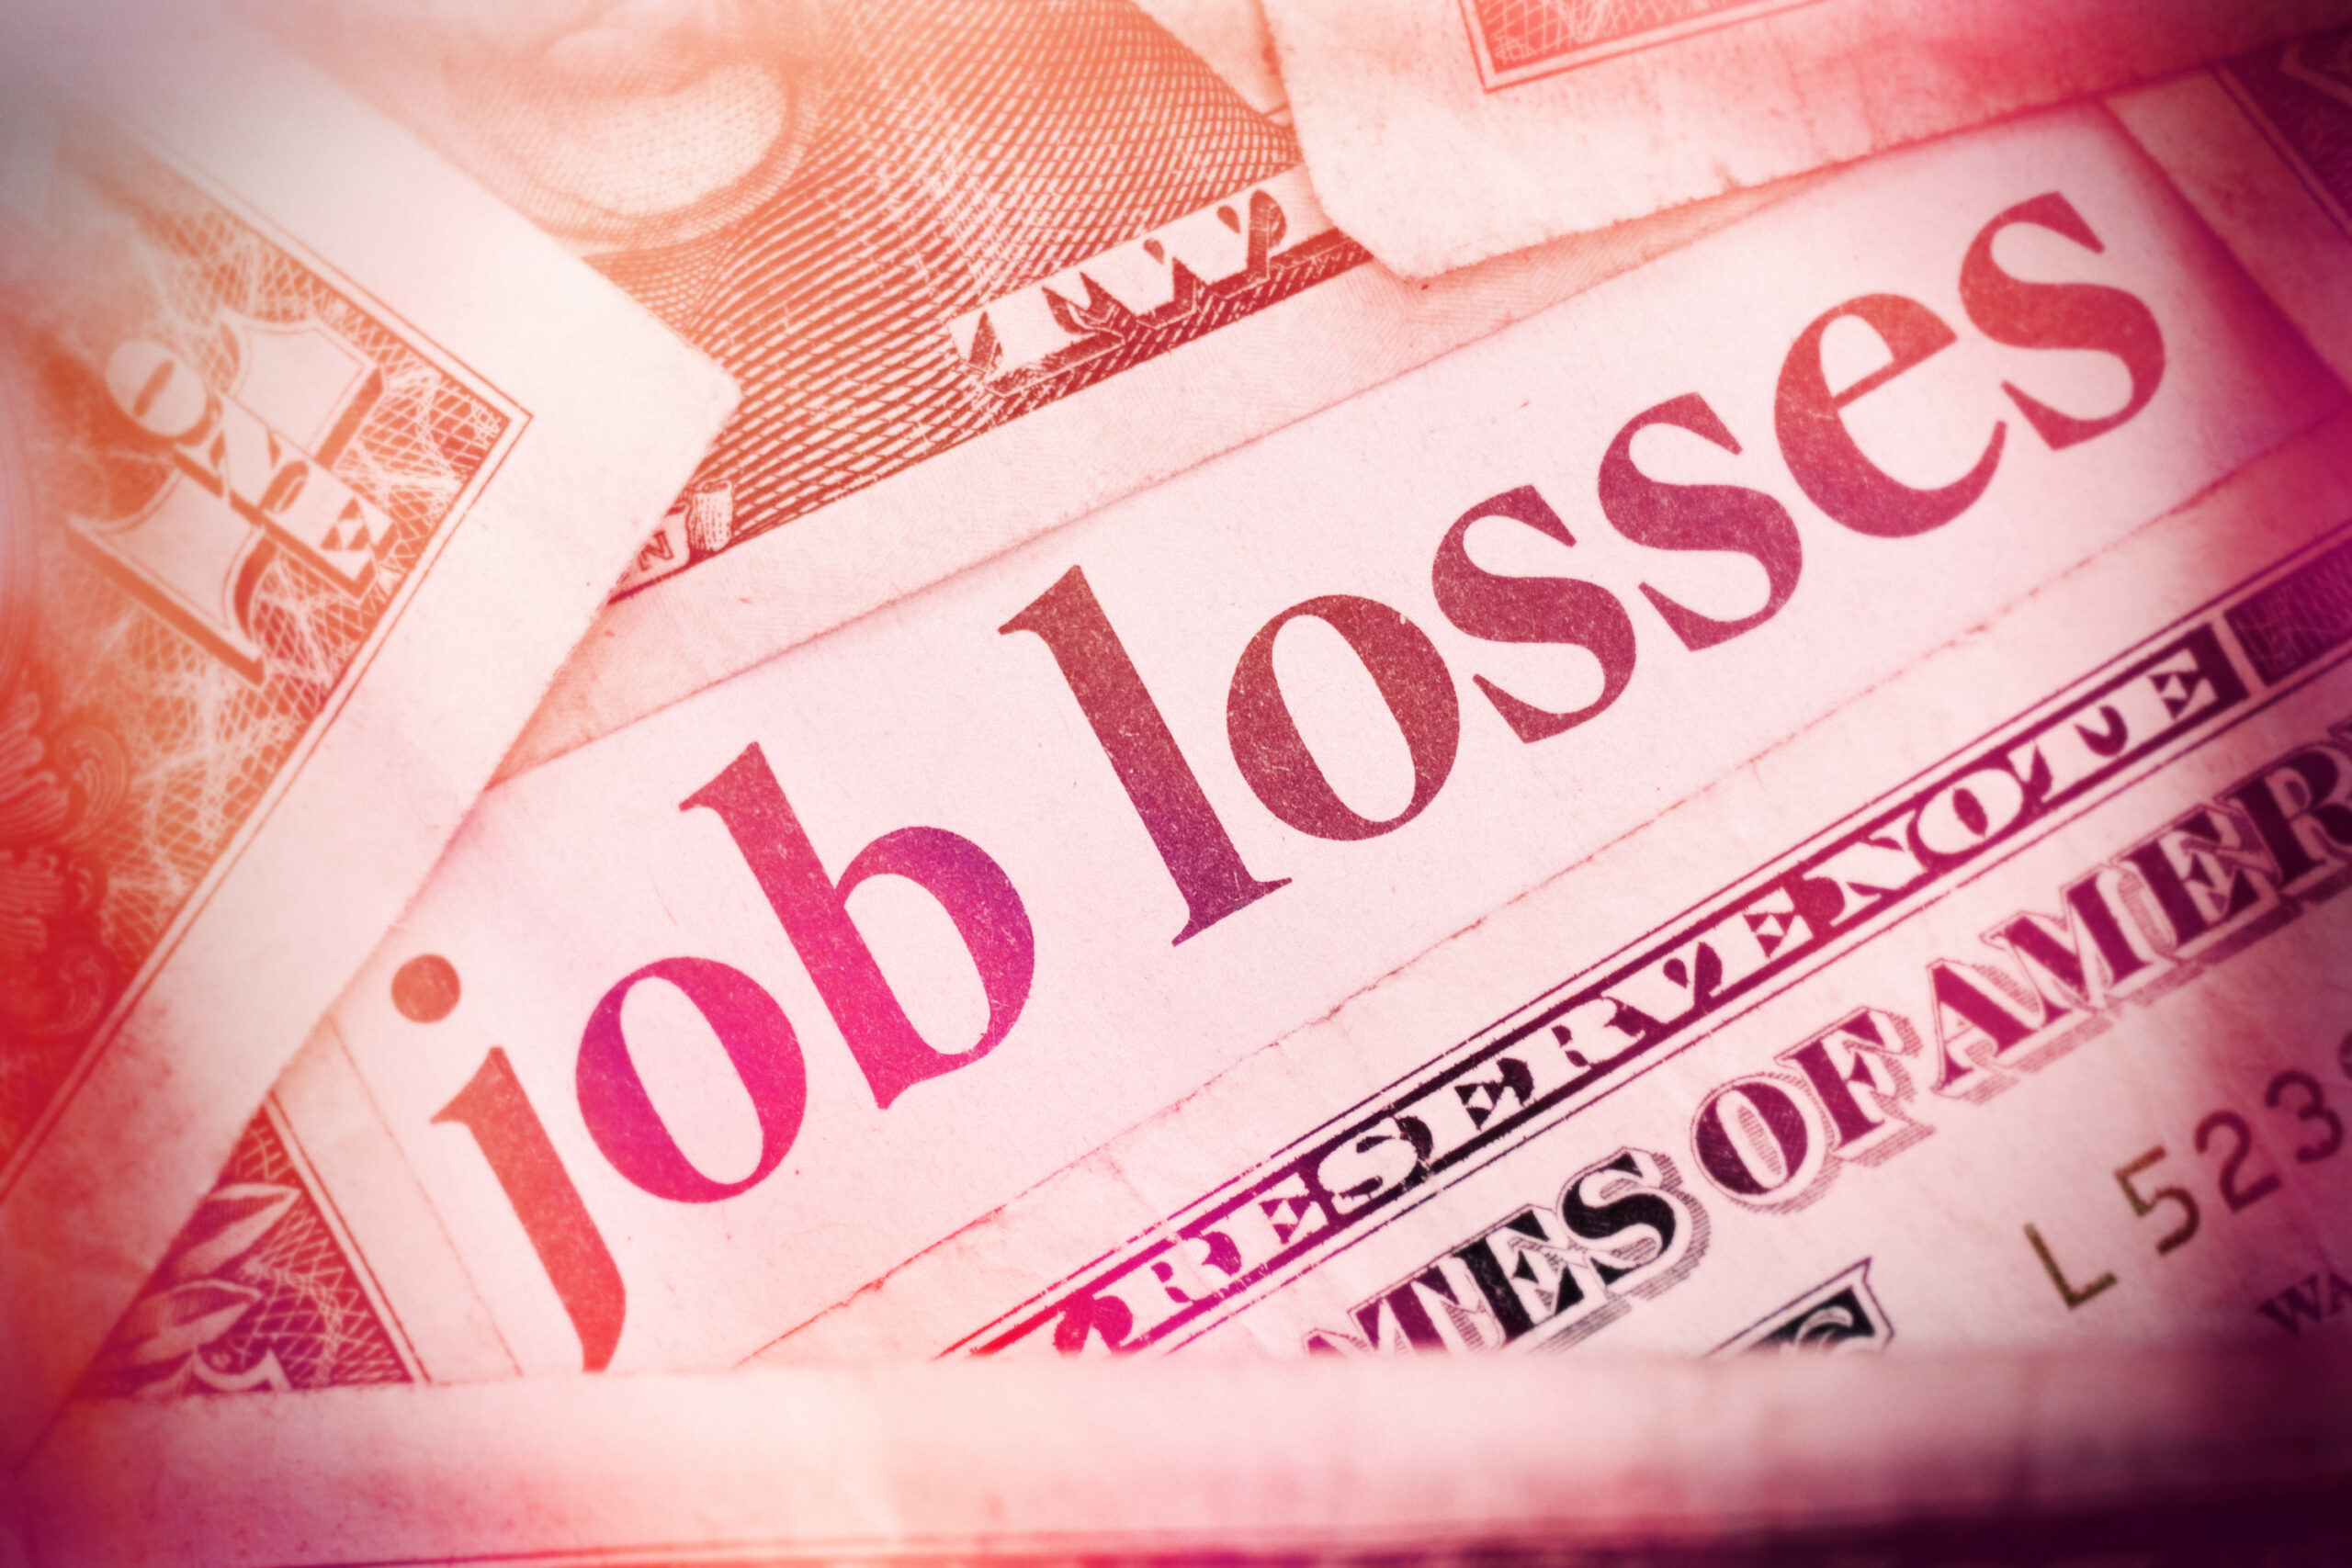 Associate Layoffs Come To Top 50 Biglaw Firm